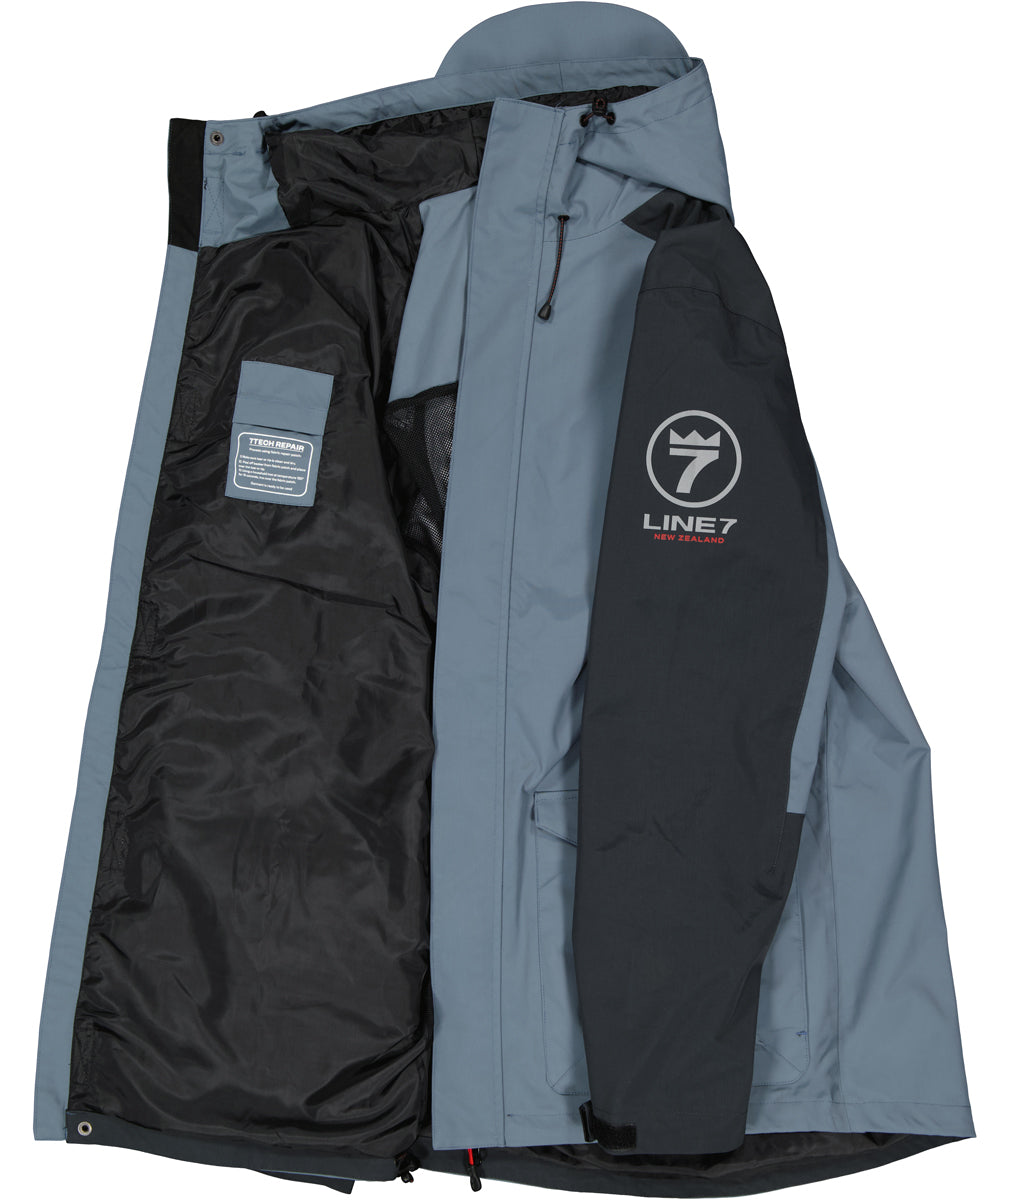 line-7-women-s-storm-armour10-waterproof-2-layer-jacket_2.jpg